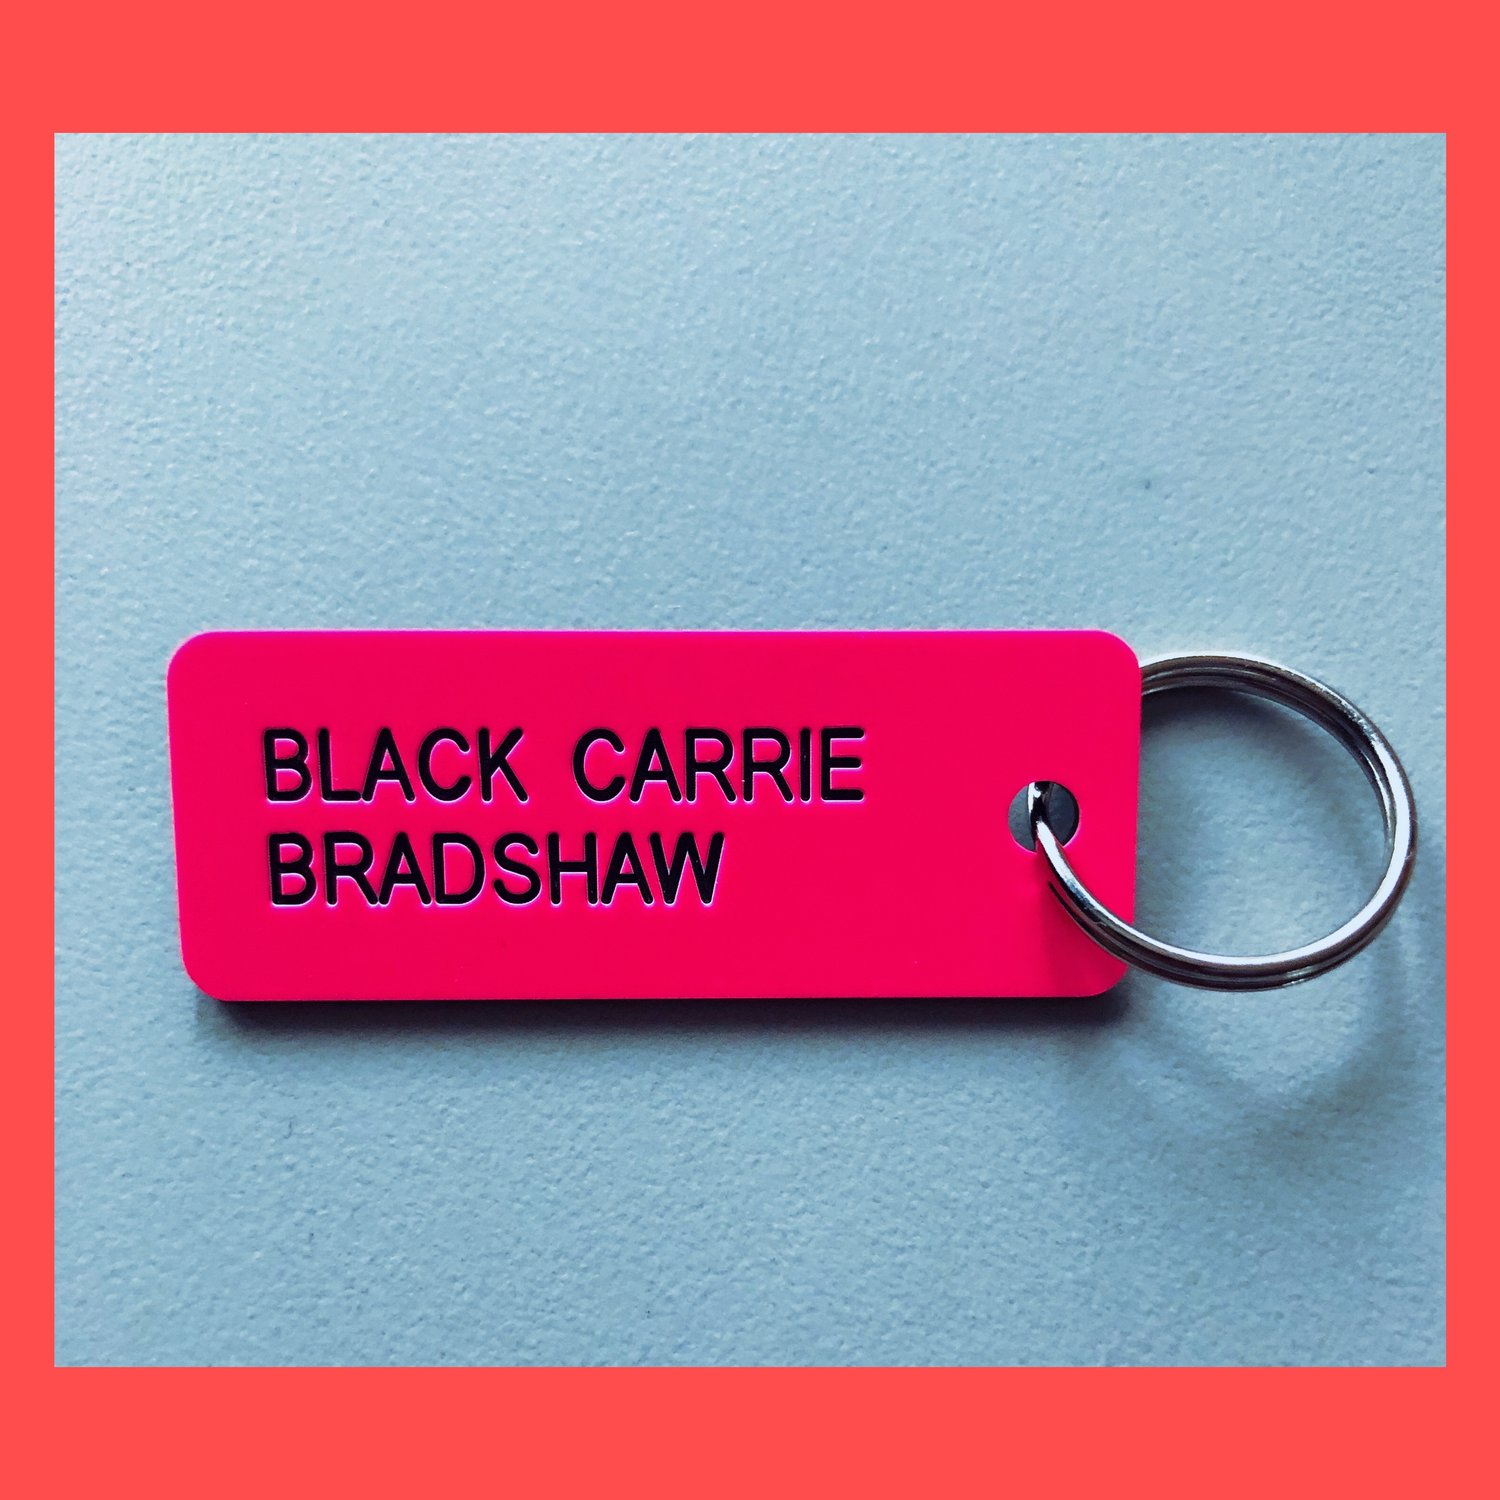 Image of "Black Carrie Bradshaw" Keytag